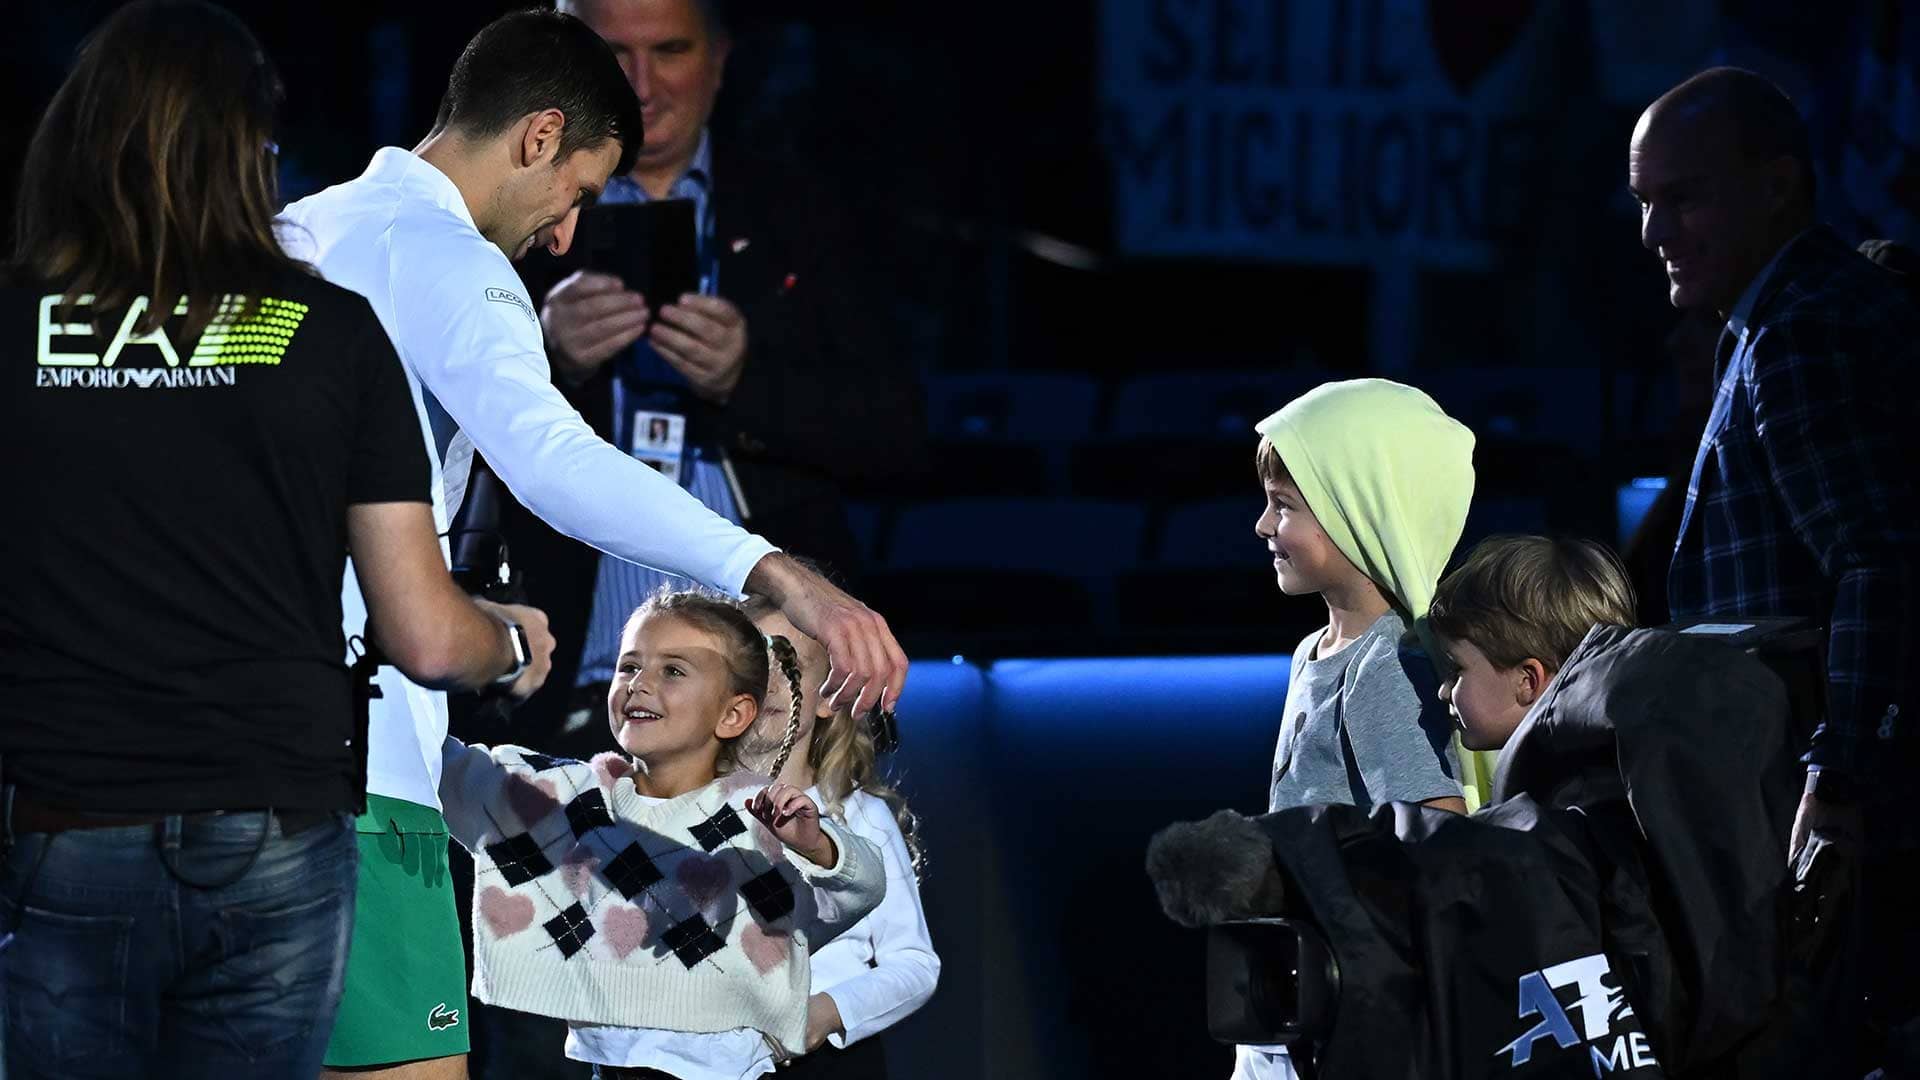 Family Fun Motivating Novak Djokovic In Turin | ATP Tour | Tennis